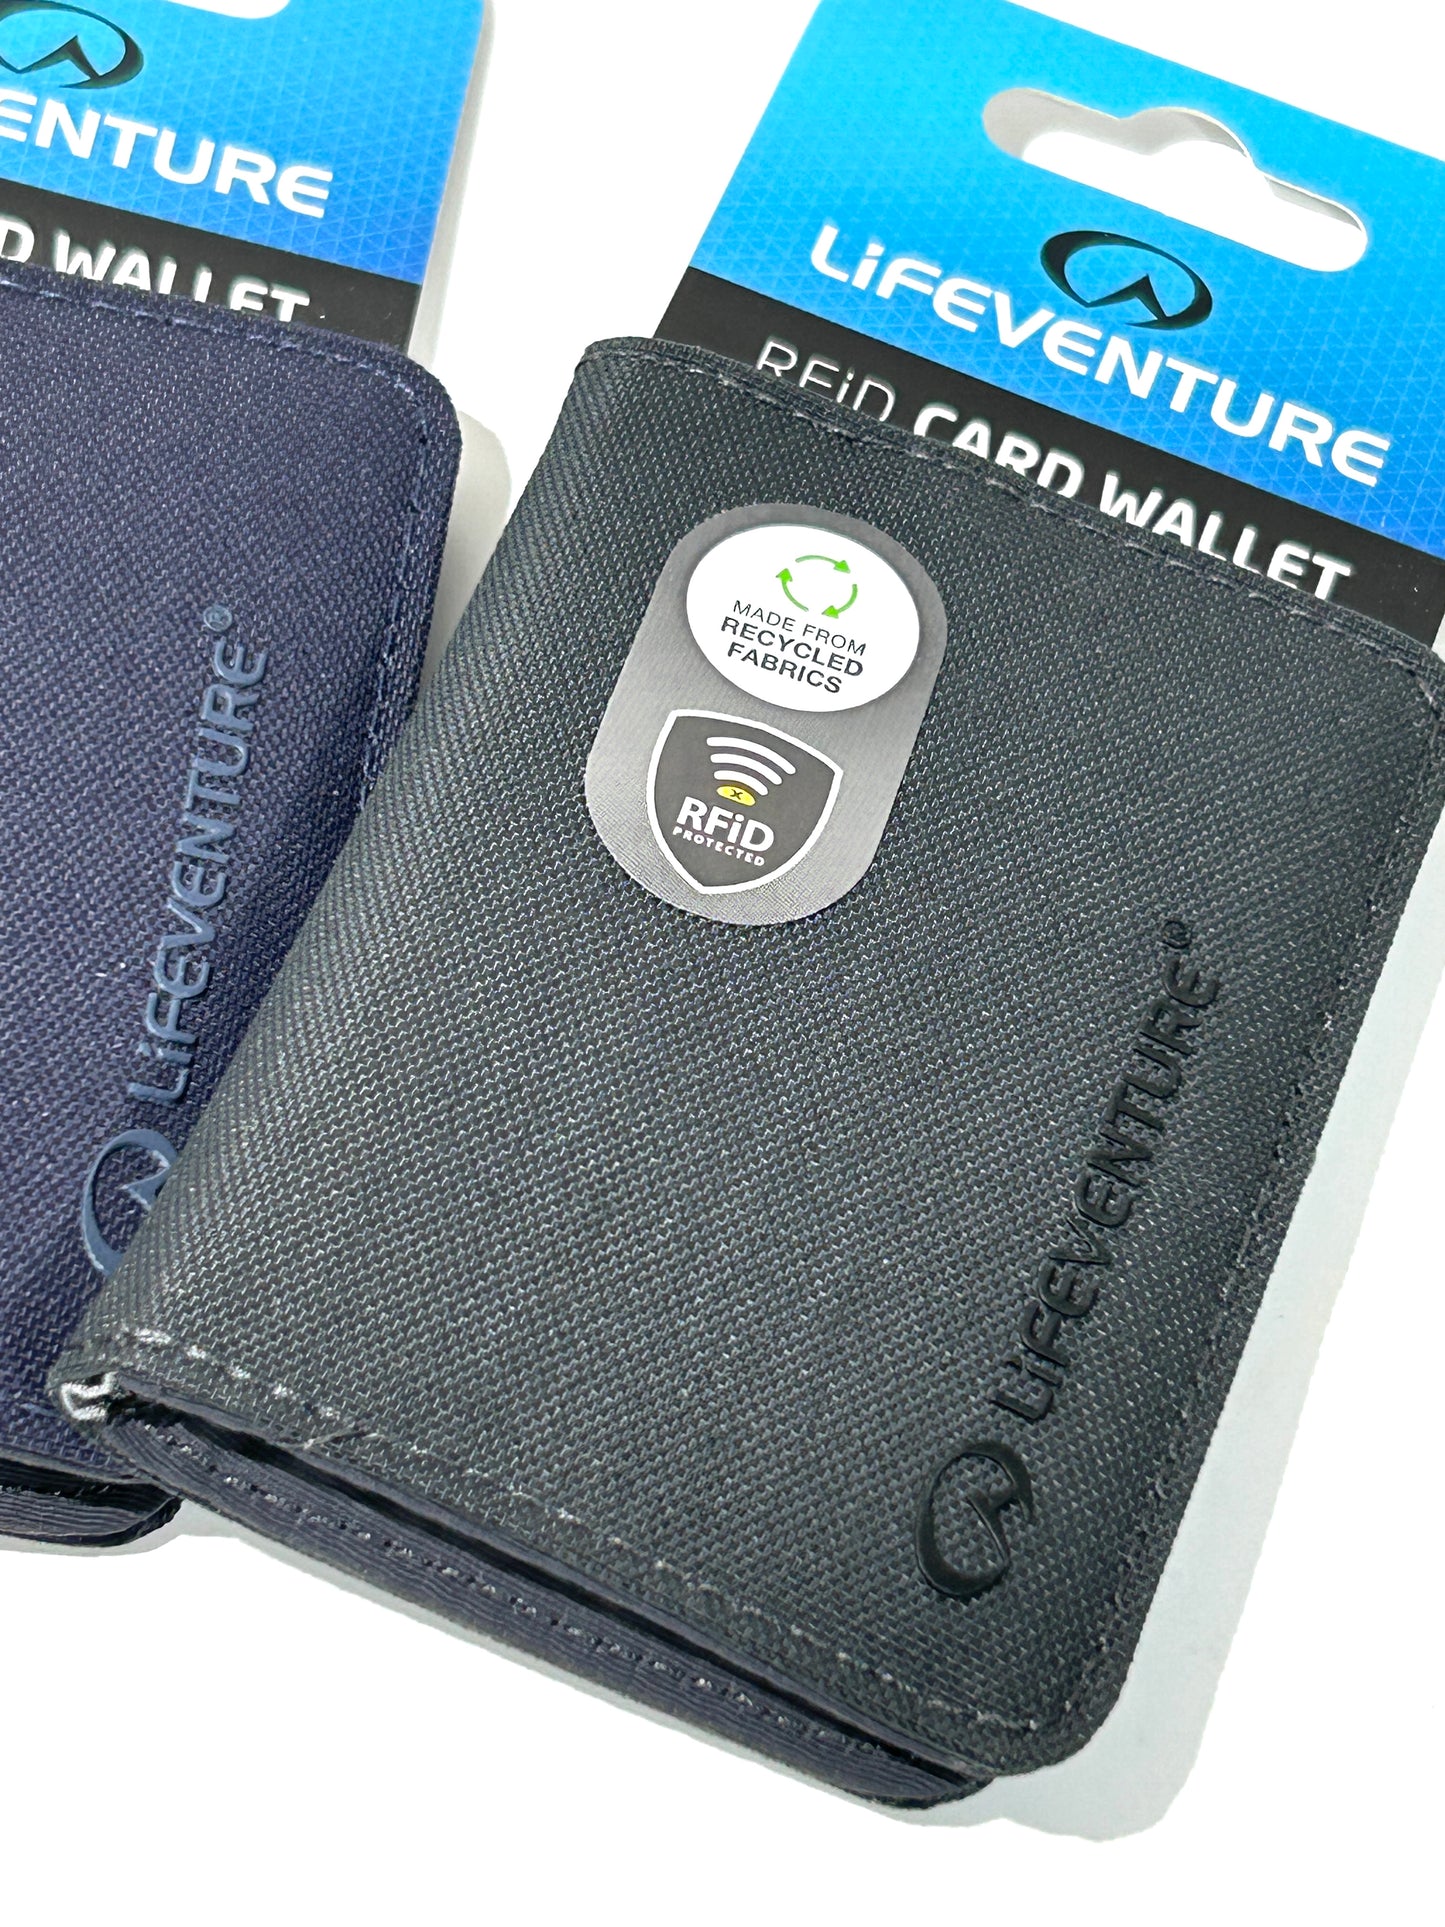 LiFEVENTURE RFiD Card Wallet